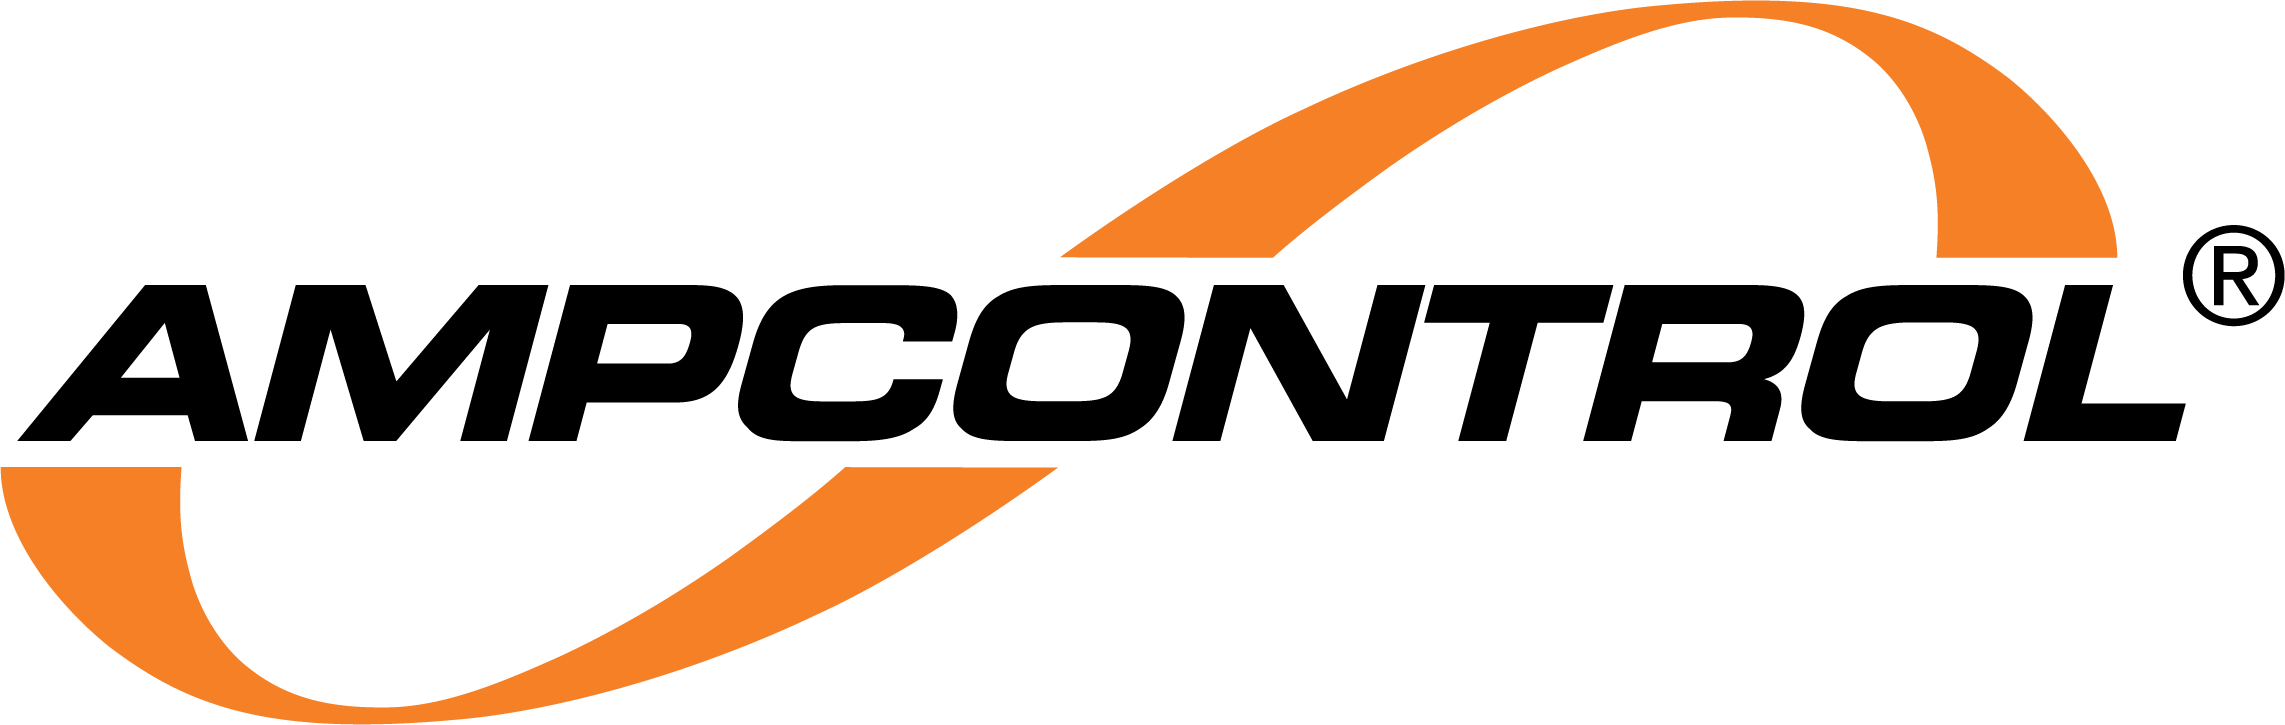 Ampcontrol black and orange logo